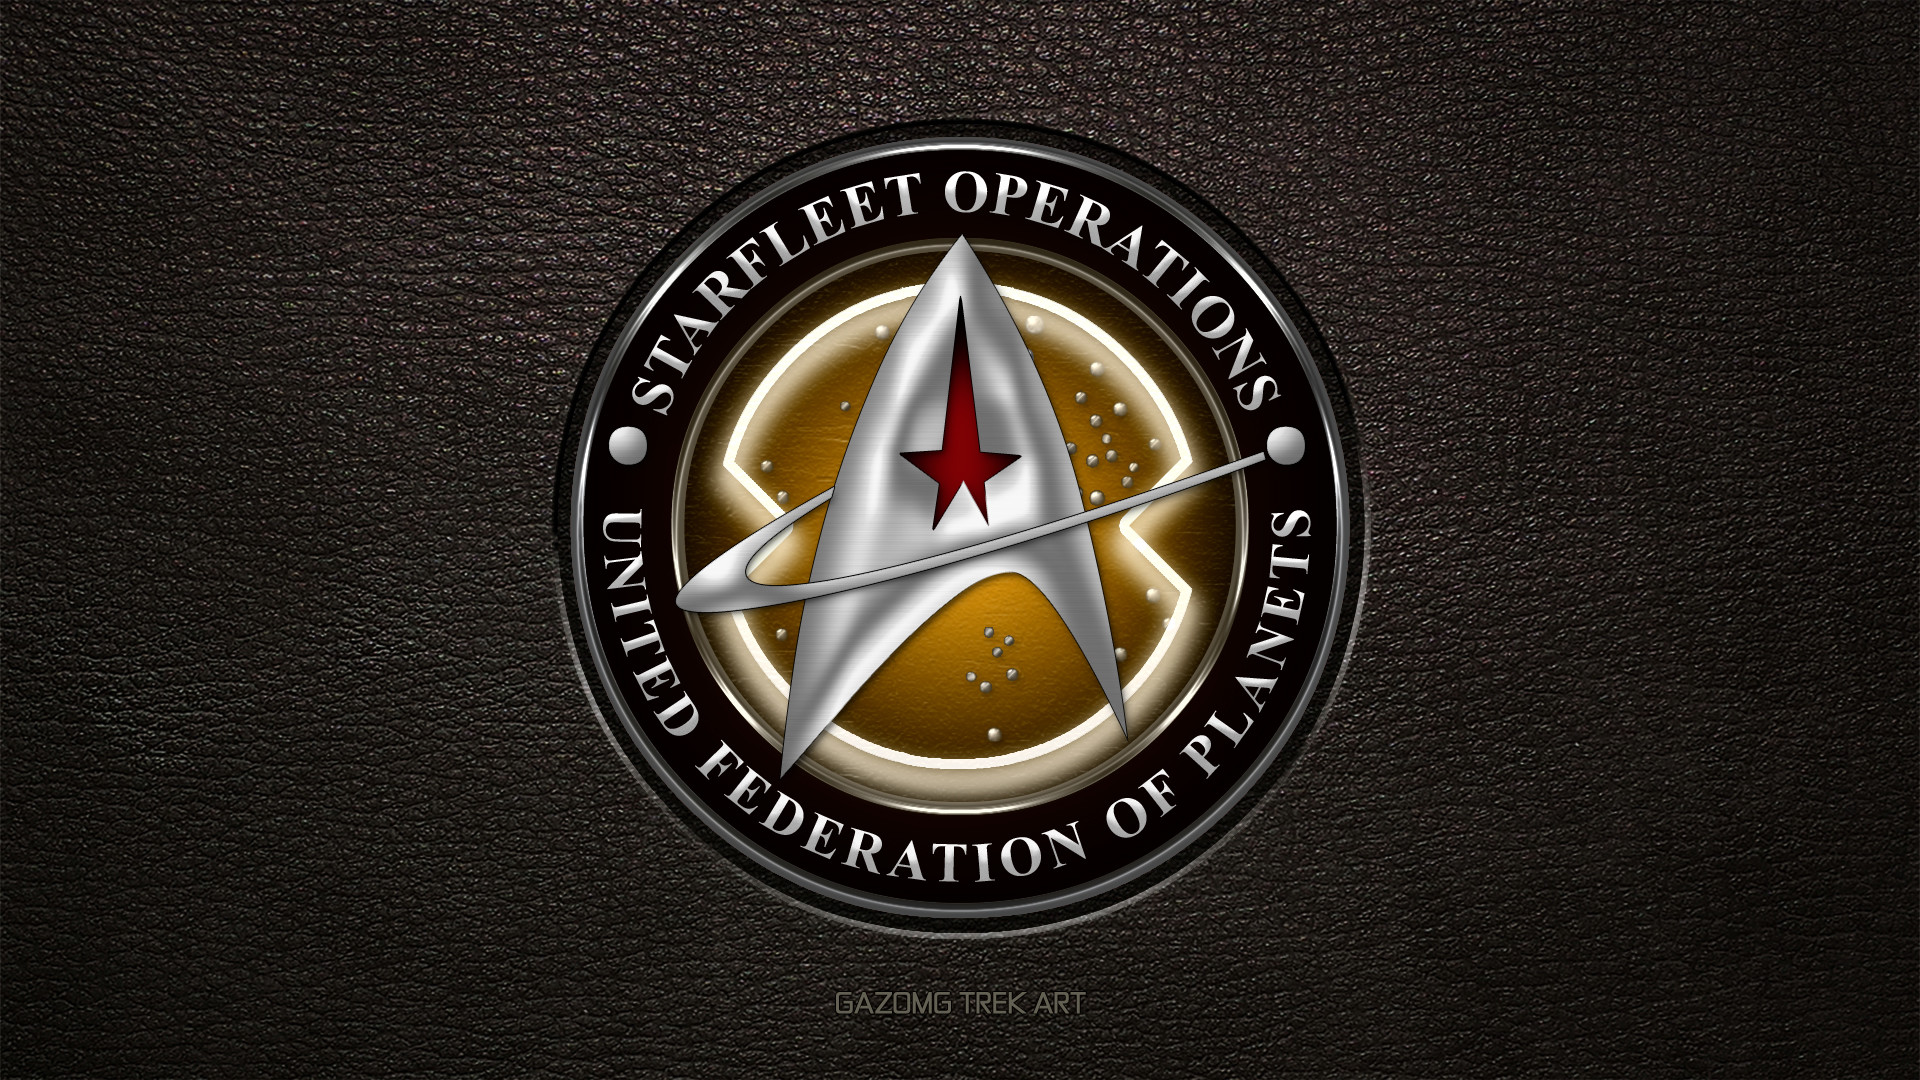 1920x1080 ... Star Trek Starfleet Operations 24th Century Logo by gazomg